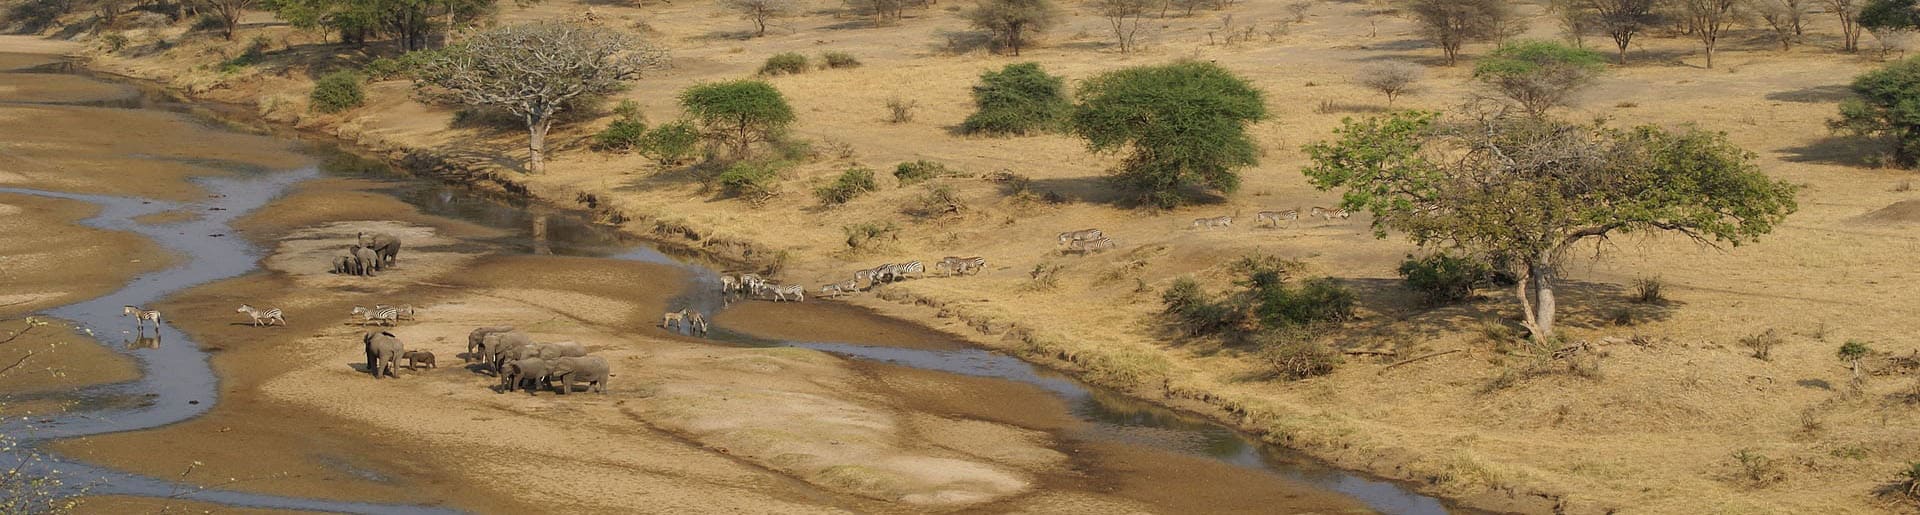 Tansania Elefanten und Zebras am Fluss